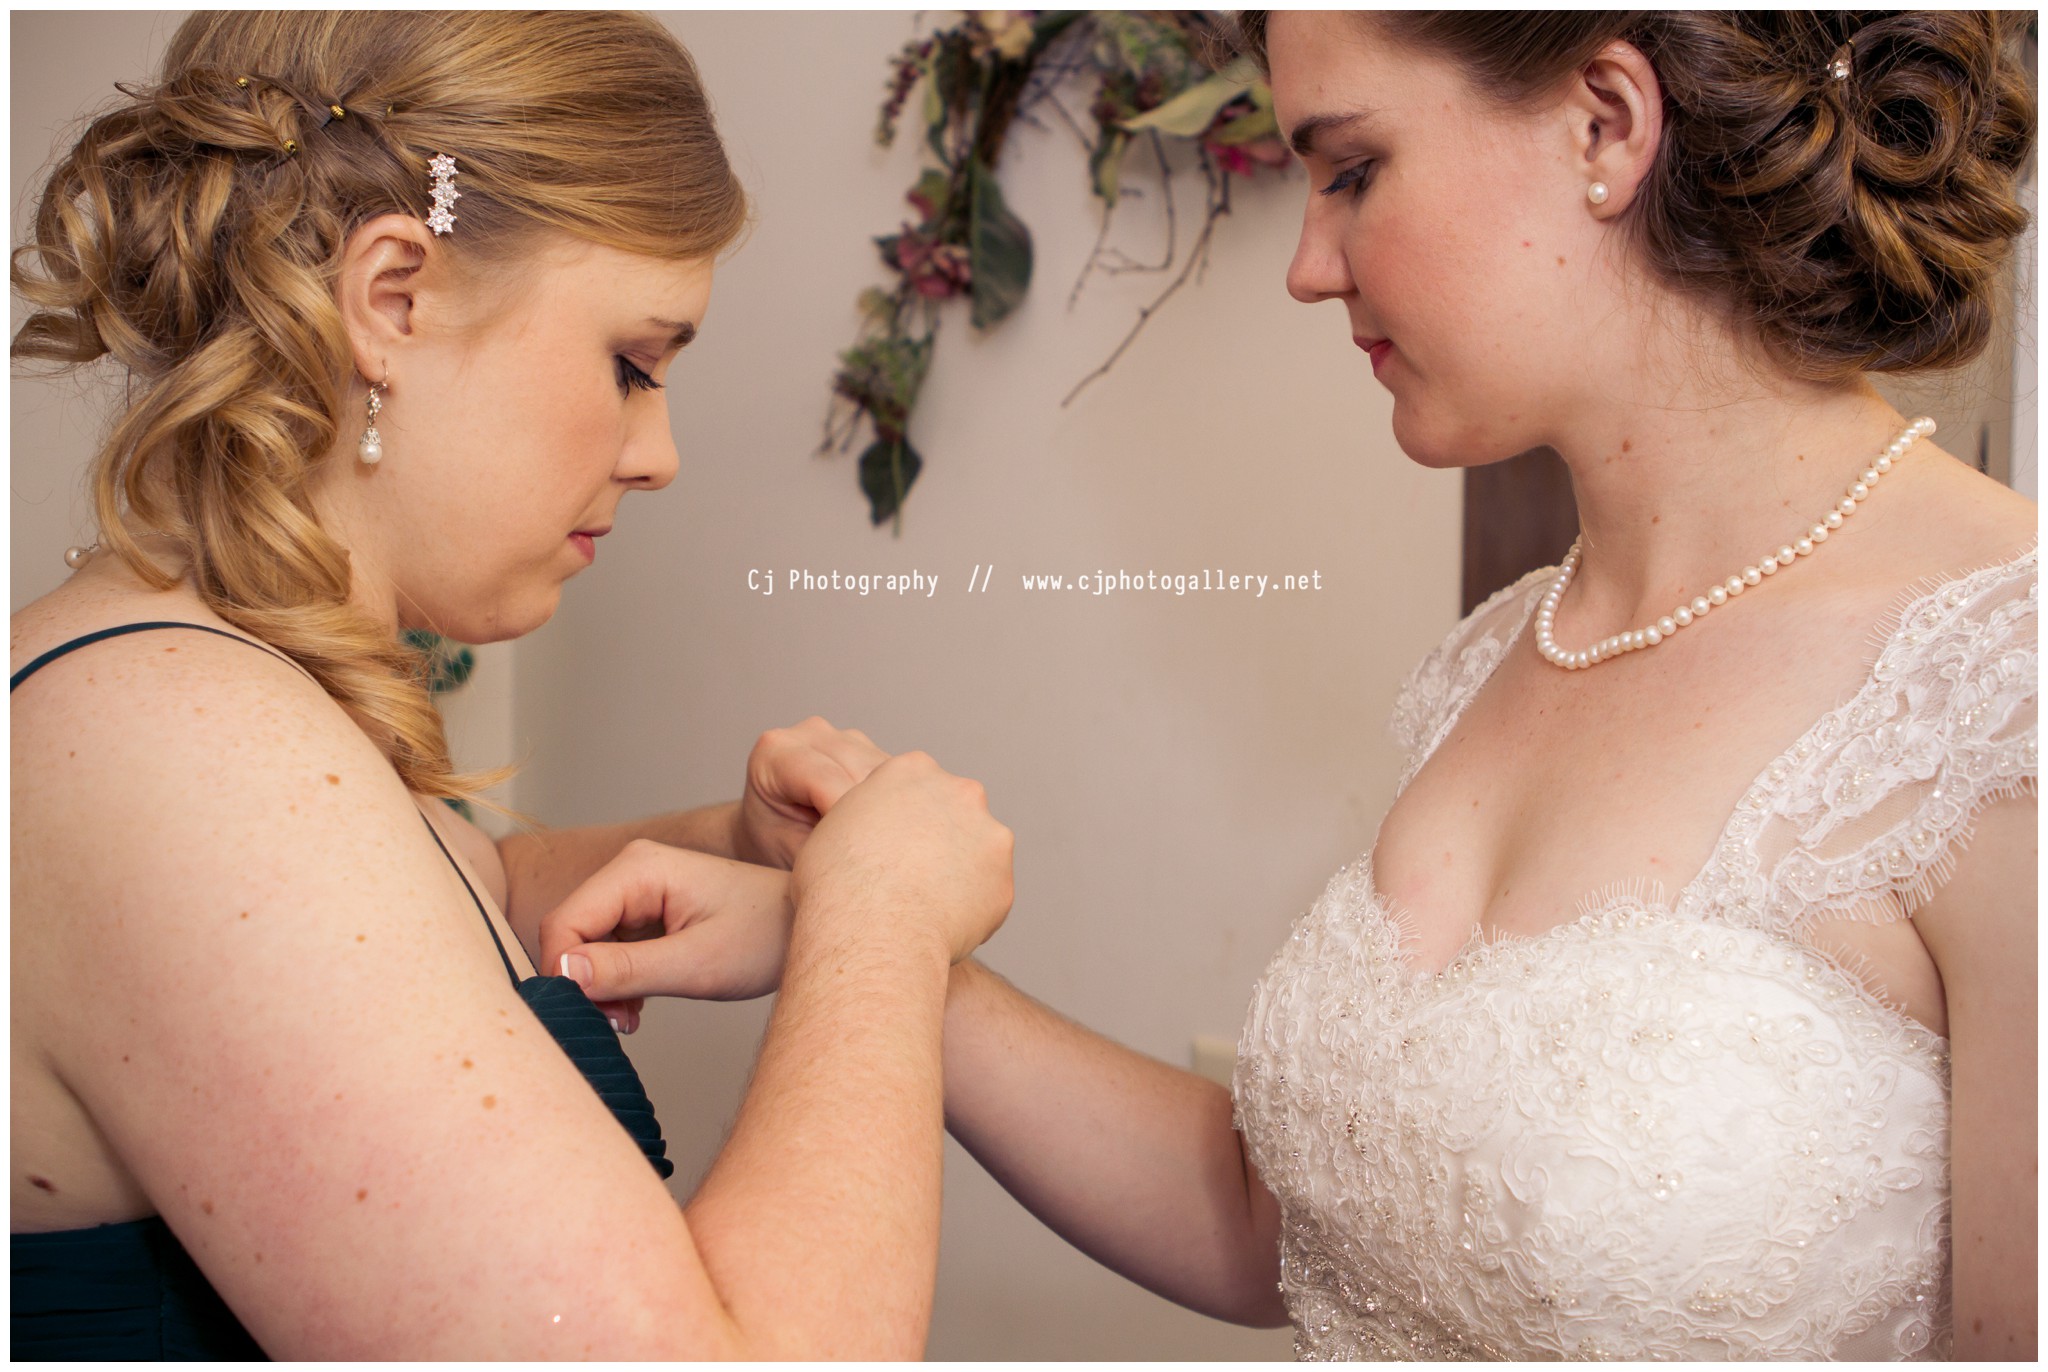 Appleton Wisconsin Wedding Photography - Cj Photography